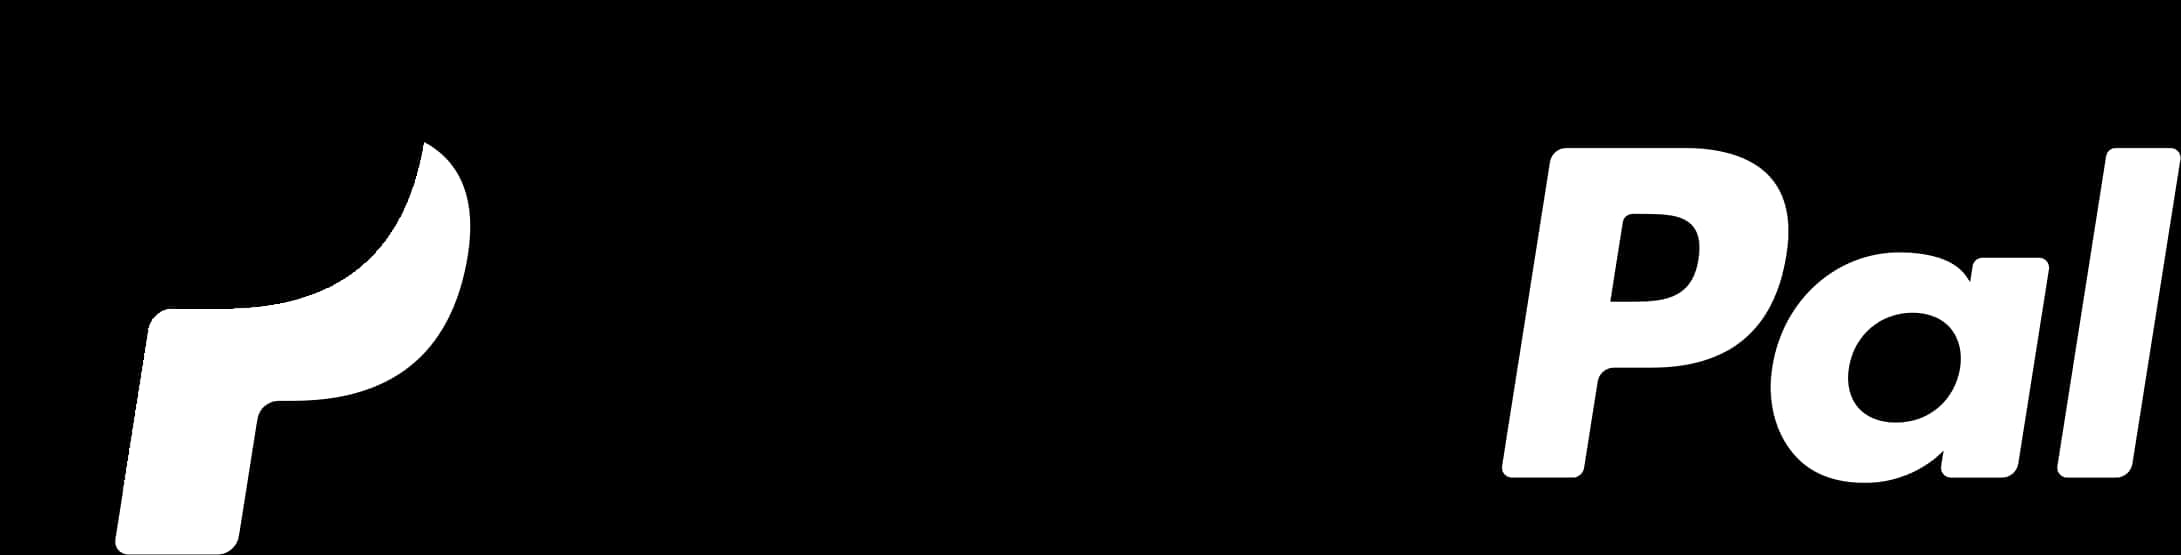 Black Paypal Logo Edit